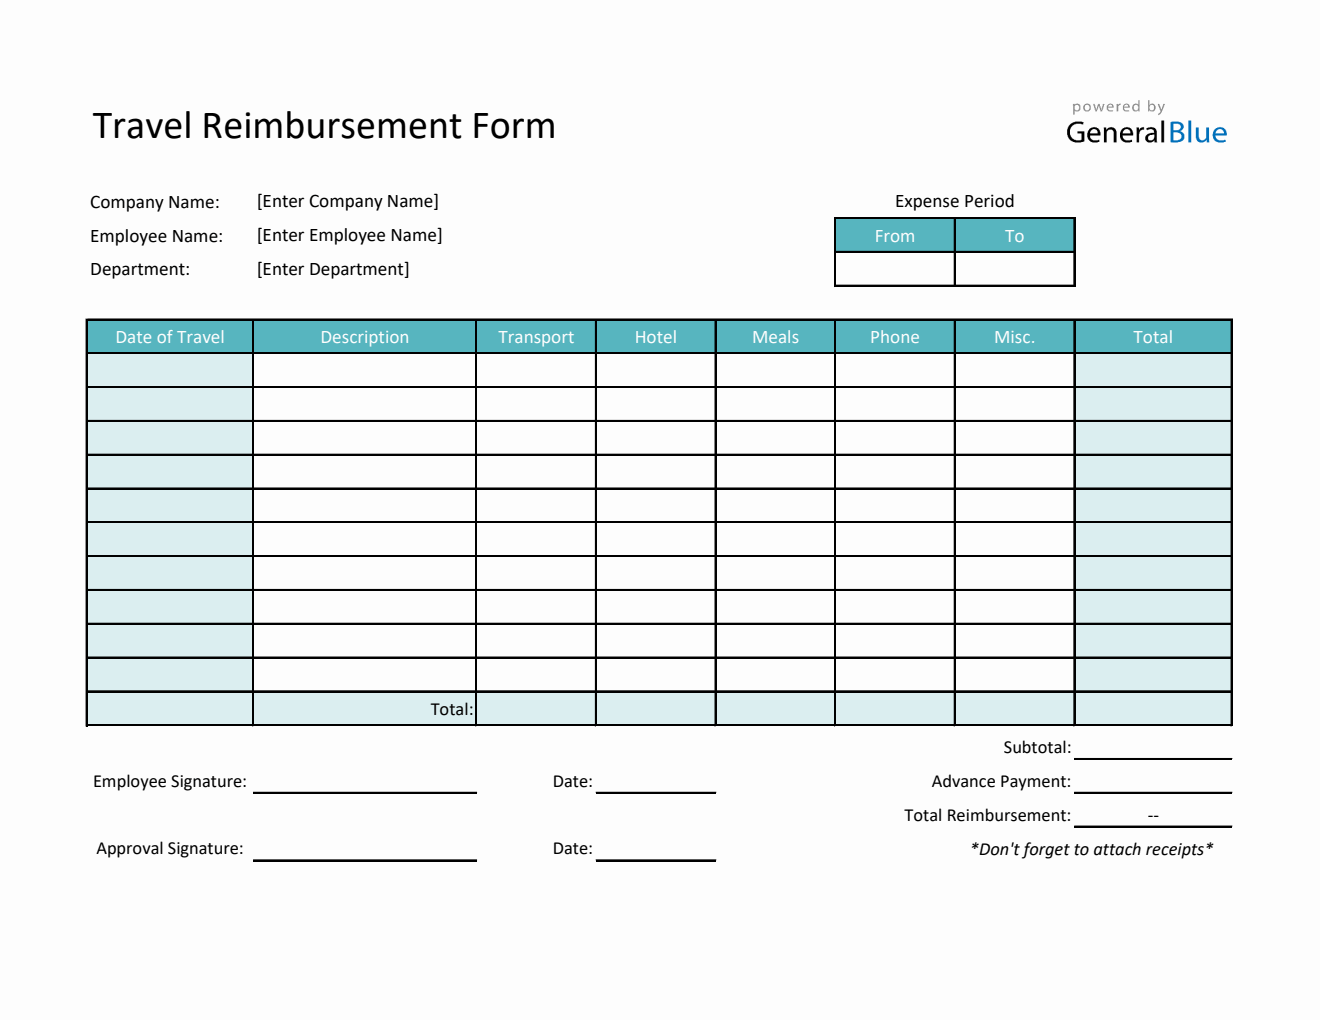 Travel Reimbursement Form in Excel (Colorful)